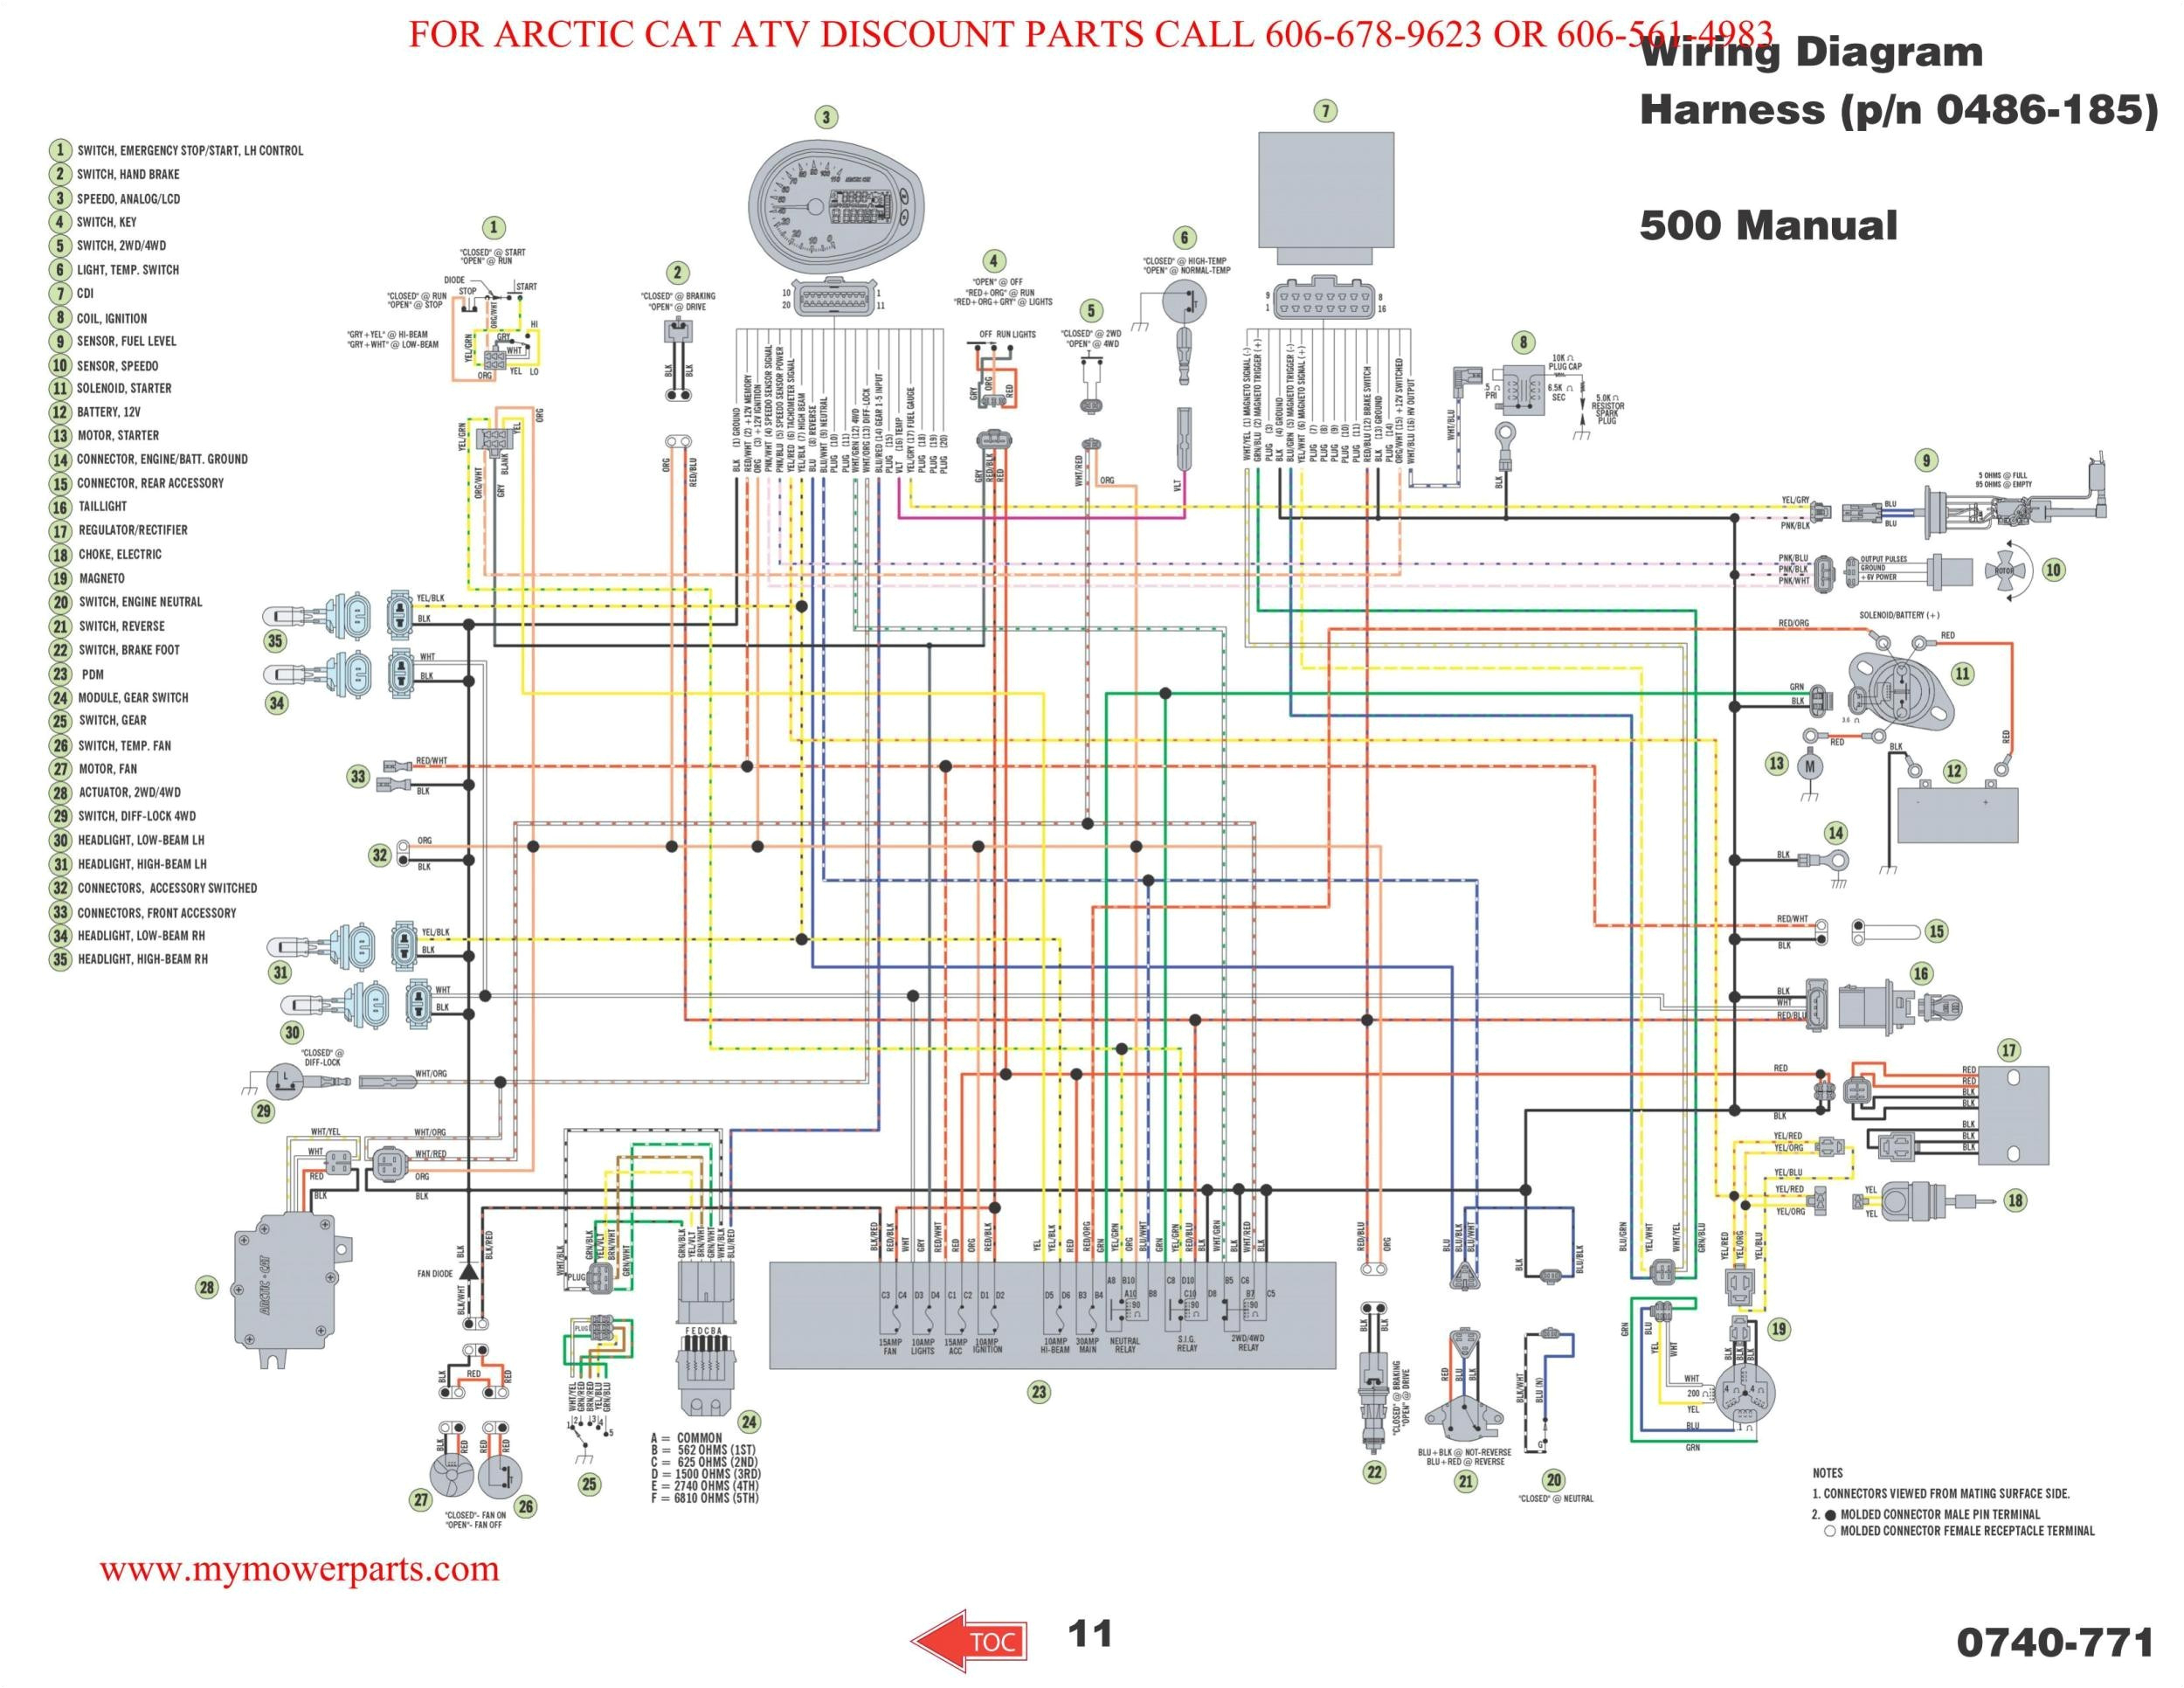 2004 polaris predator 90 wiring diagram valid polaris ranger wiring schematic wire data e280a2 of 2004 polaris predator 90 wiring diagram jpg